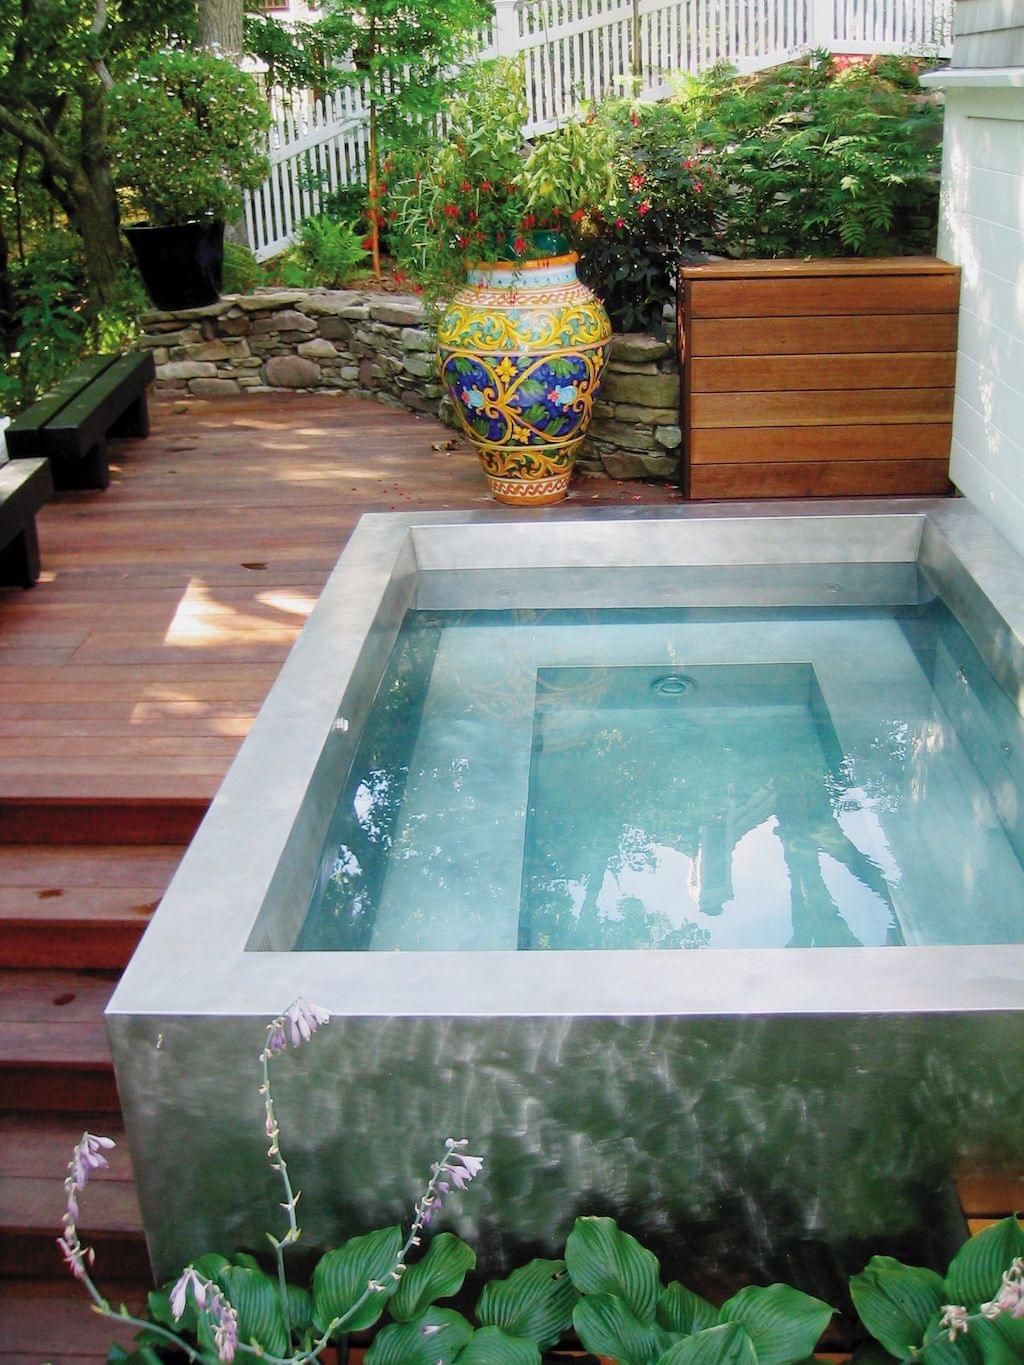 Pinterest-2-plonsbad-klein-zwembad-plunge-pool-wellness-spa-tuin-achtertuin